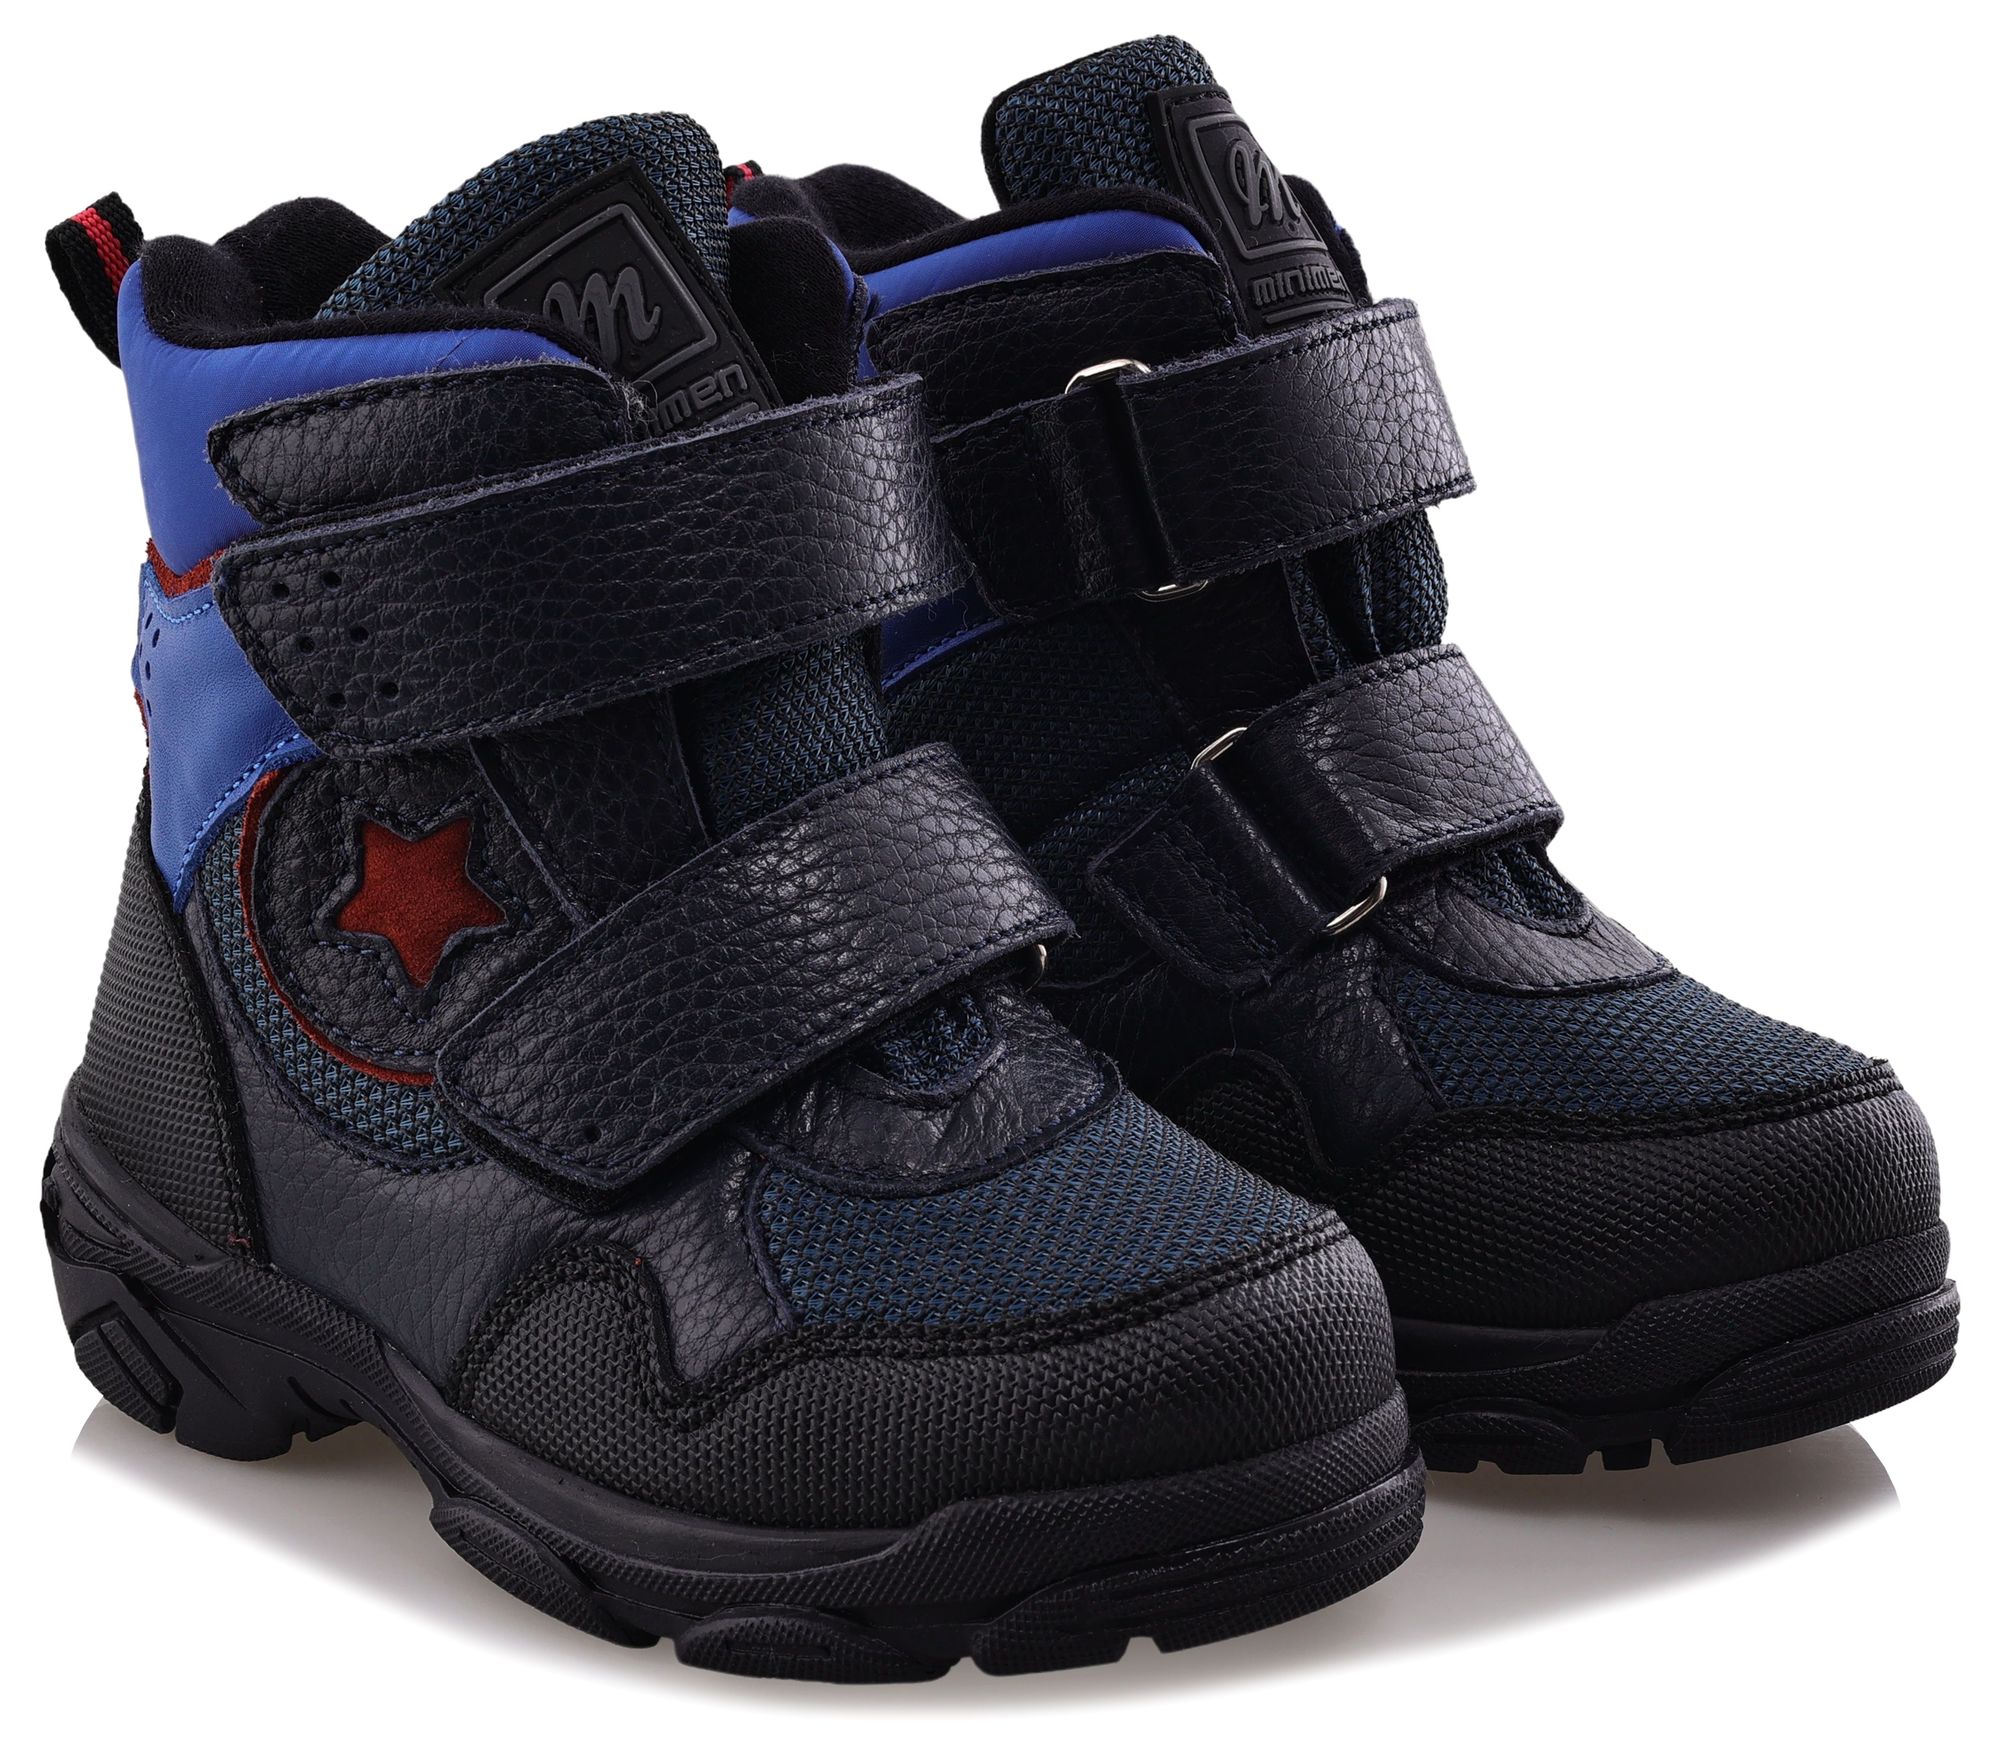 Ботинки Minimen для мальчиков, тёмно-синие, размер 27, 2658-63-23B-01 ботинки minimen для девочек сиреневые размер 30 2658 63 23b 04